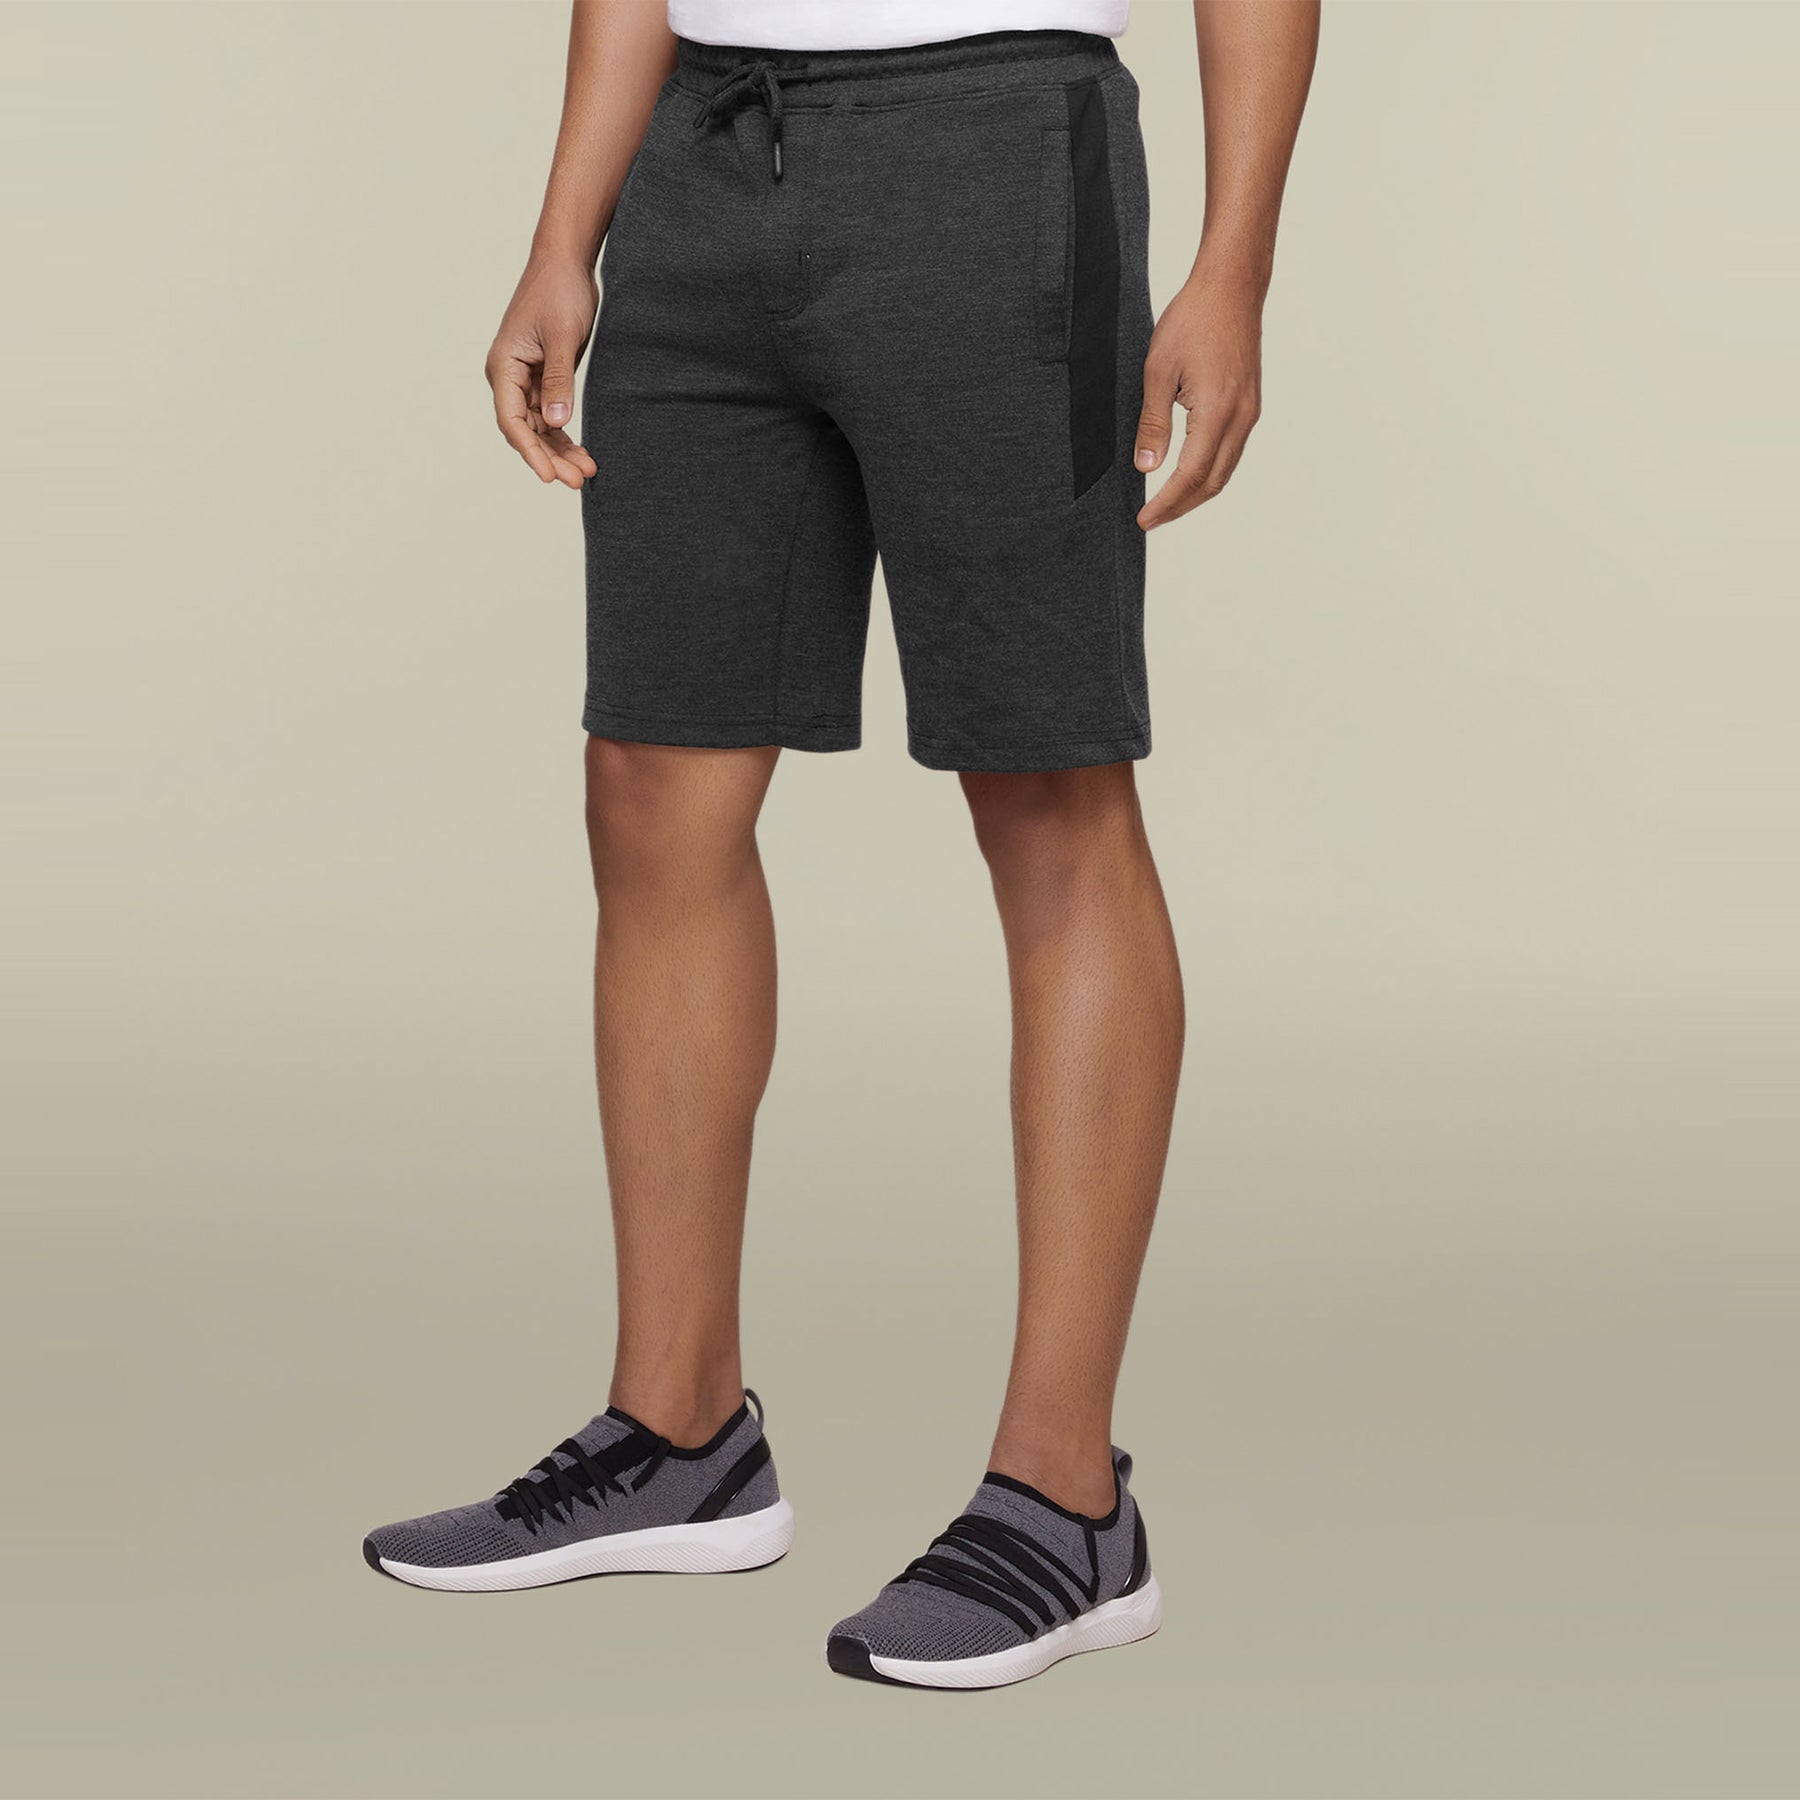 Code Cotton Rich Shorts For Men Graphite Grey - XYXX Crew